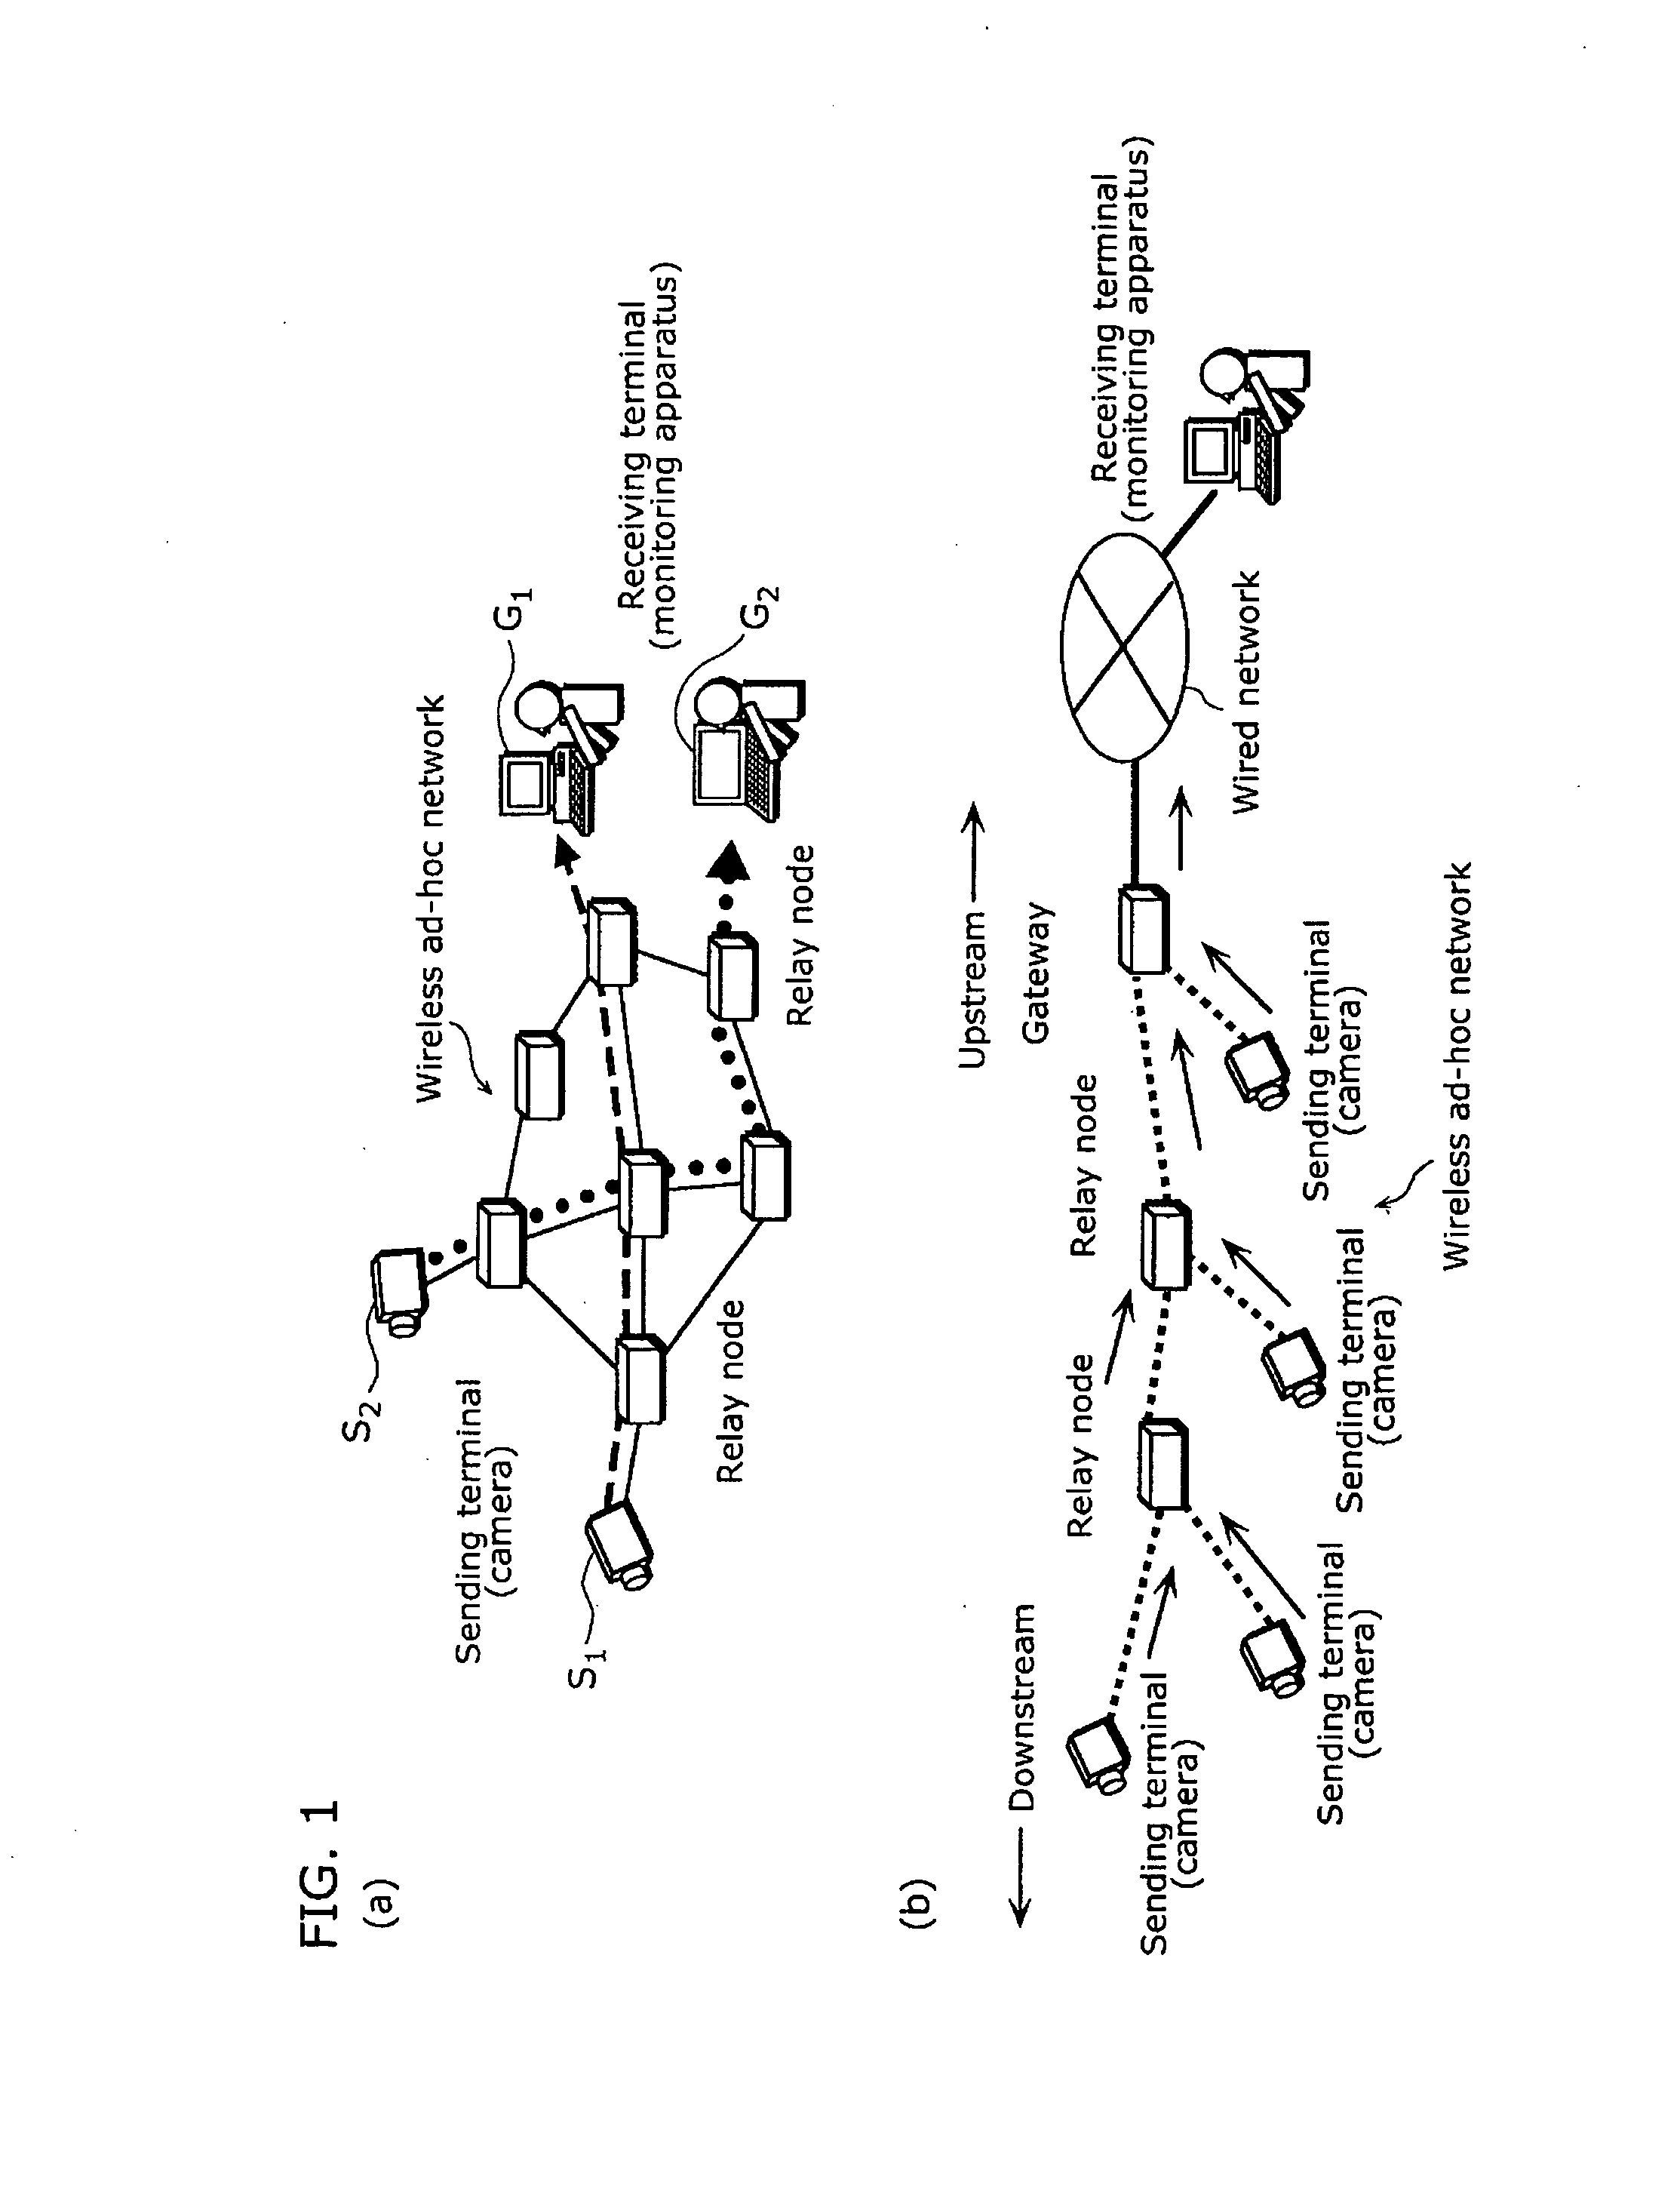 Network control apparatus, method, and program